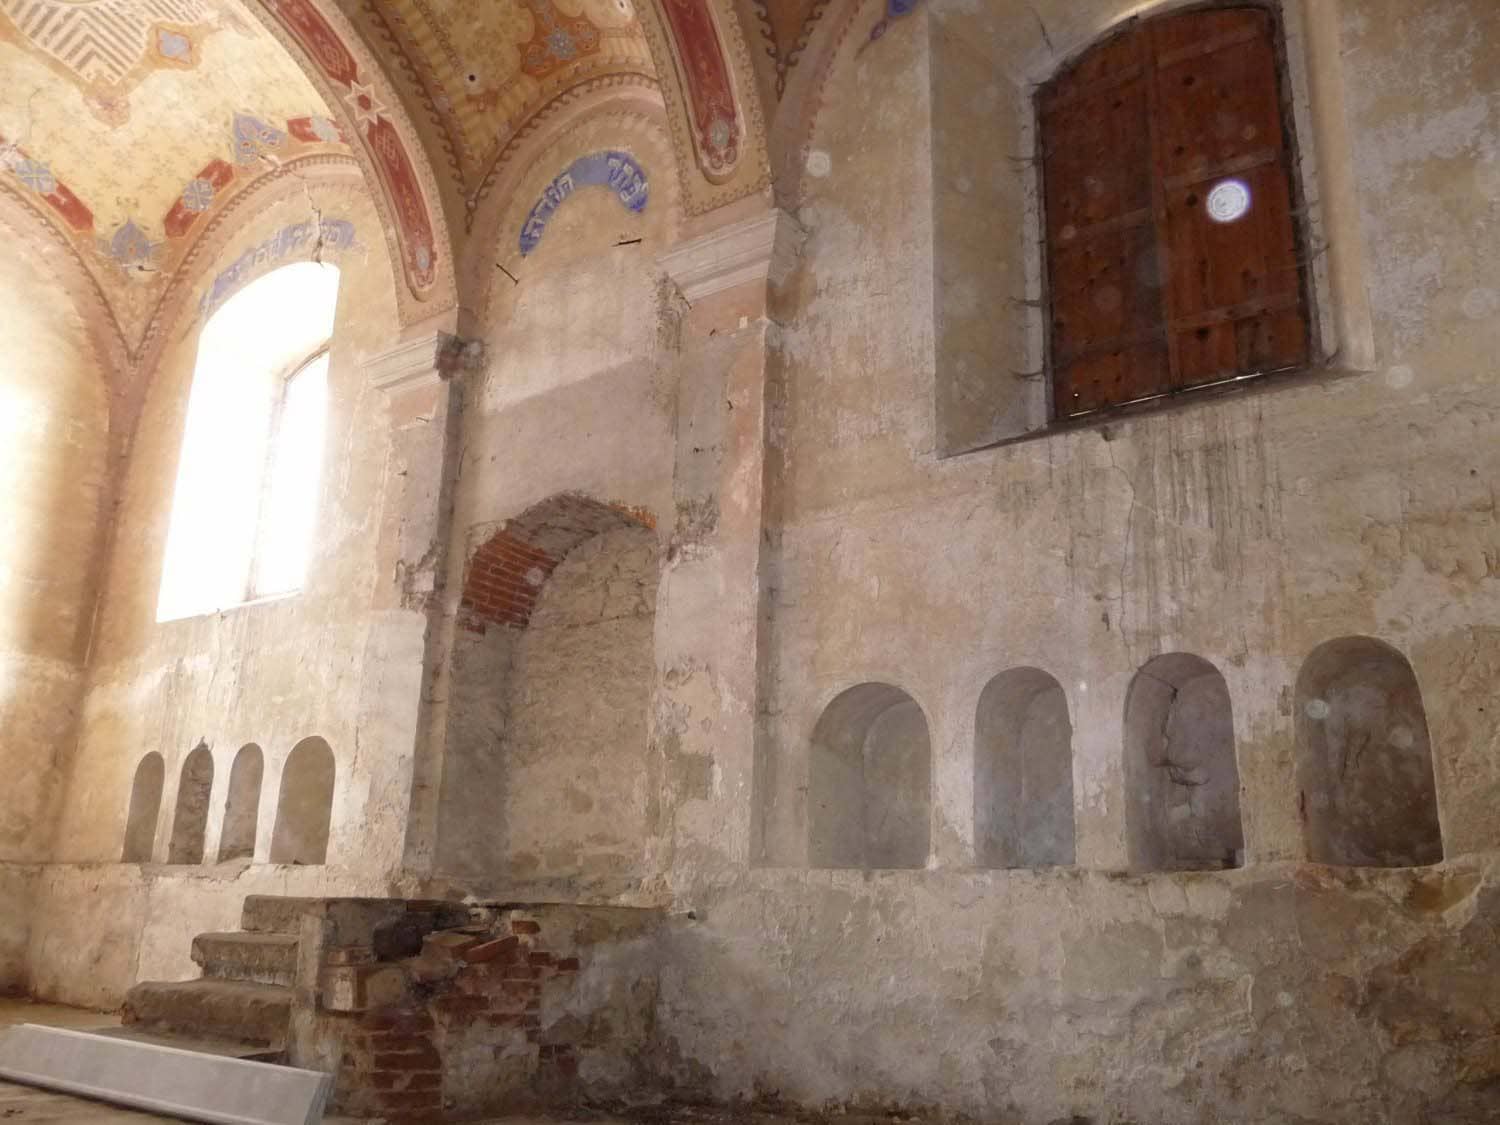 Bardejov Old Synagogue interior showing placement of Aron Hakodesh